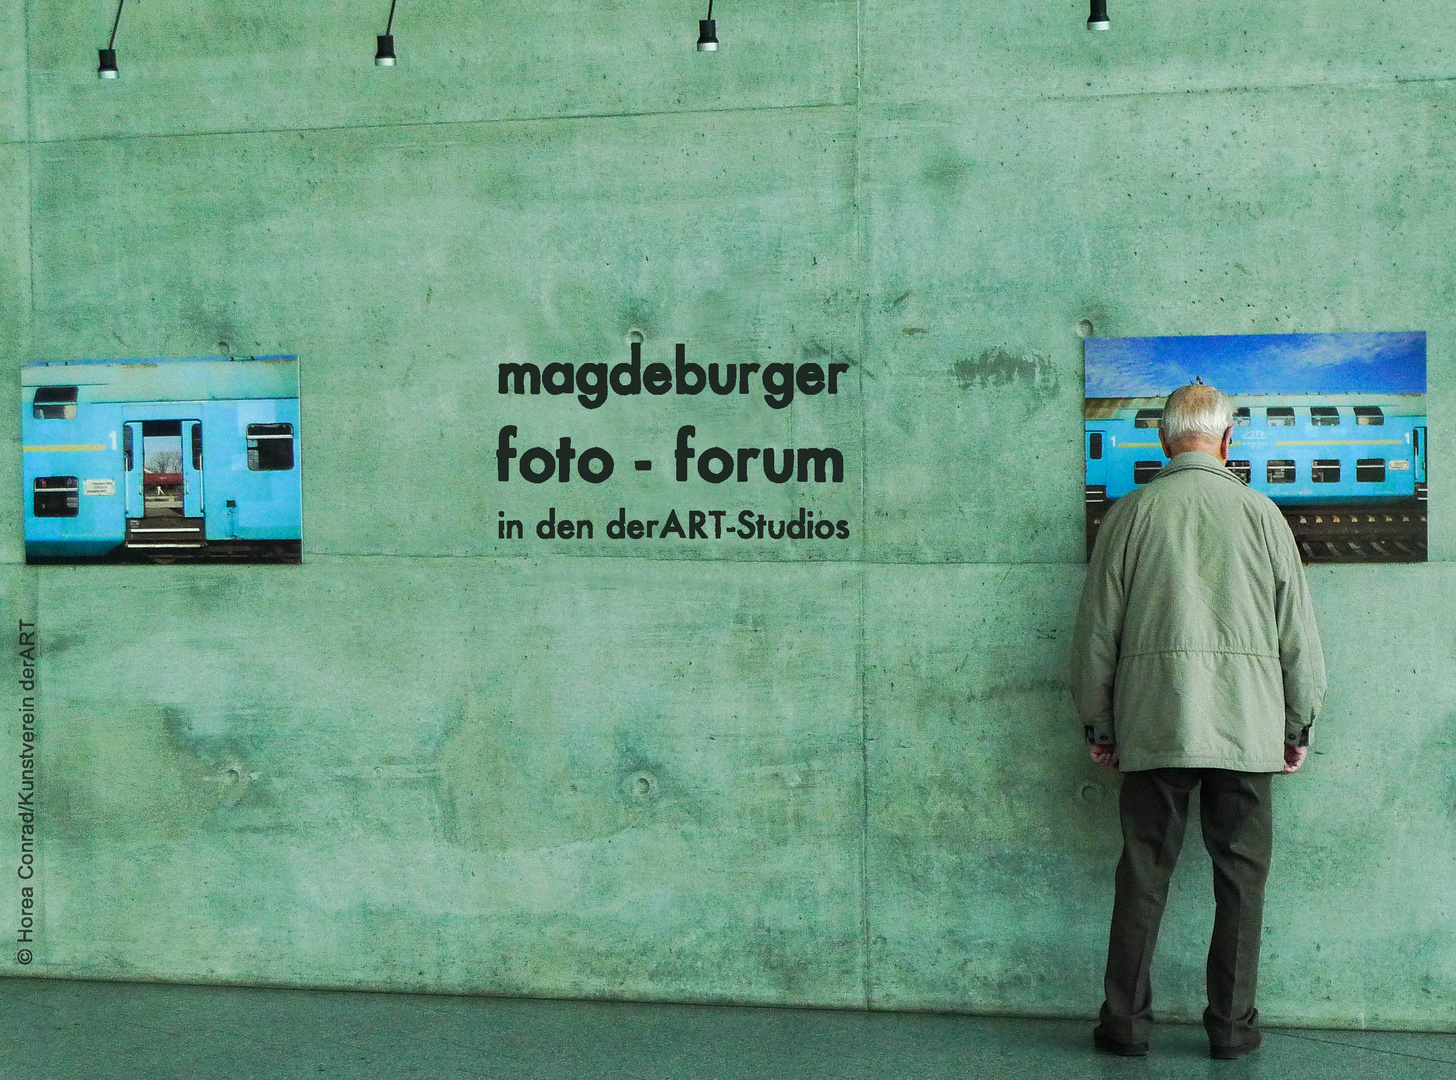 magdeburger foto-forum